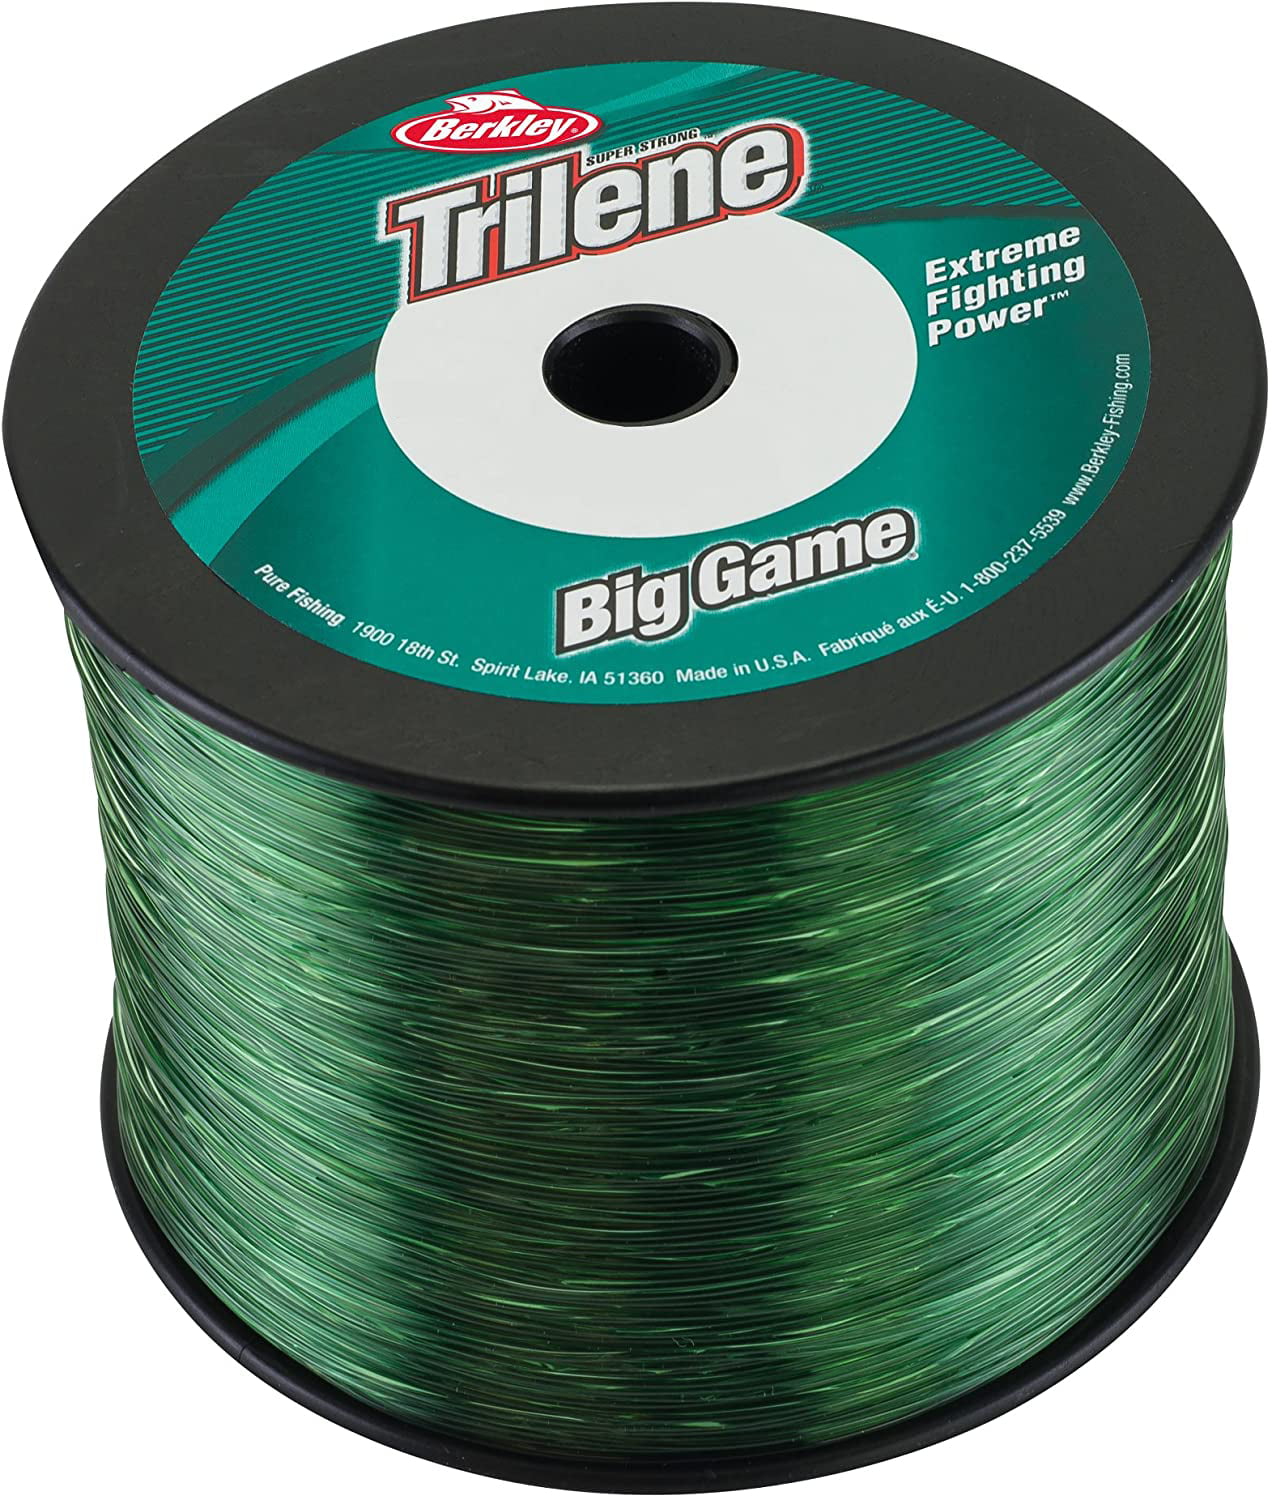 Berkley Trilene Big Game, Green, 50lb 22.6kg Monofilament Fishing Line